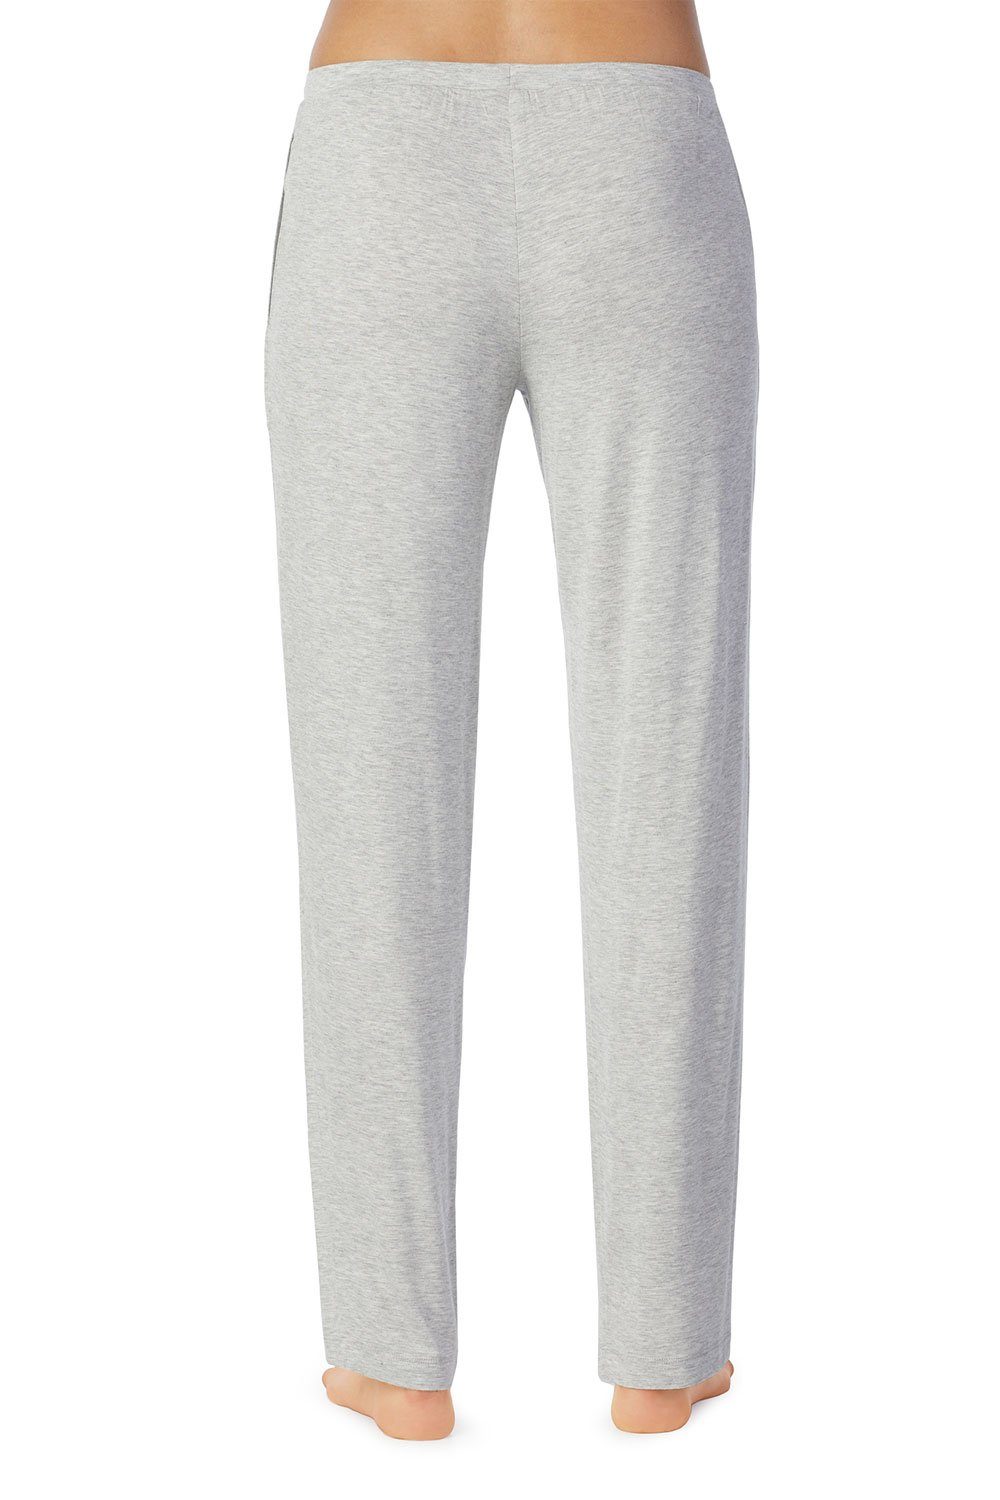 DKNY Essentials heather YI2719330 grey Pant light Loungehose